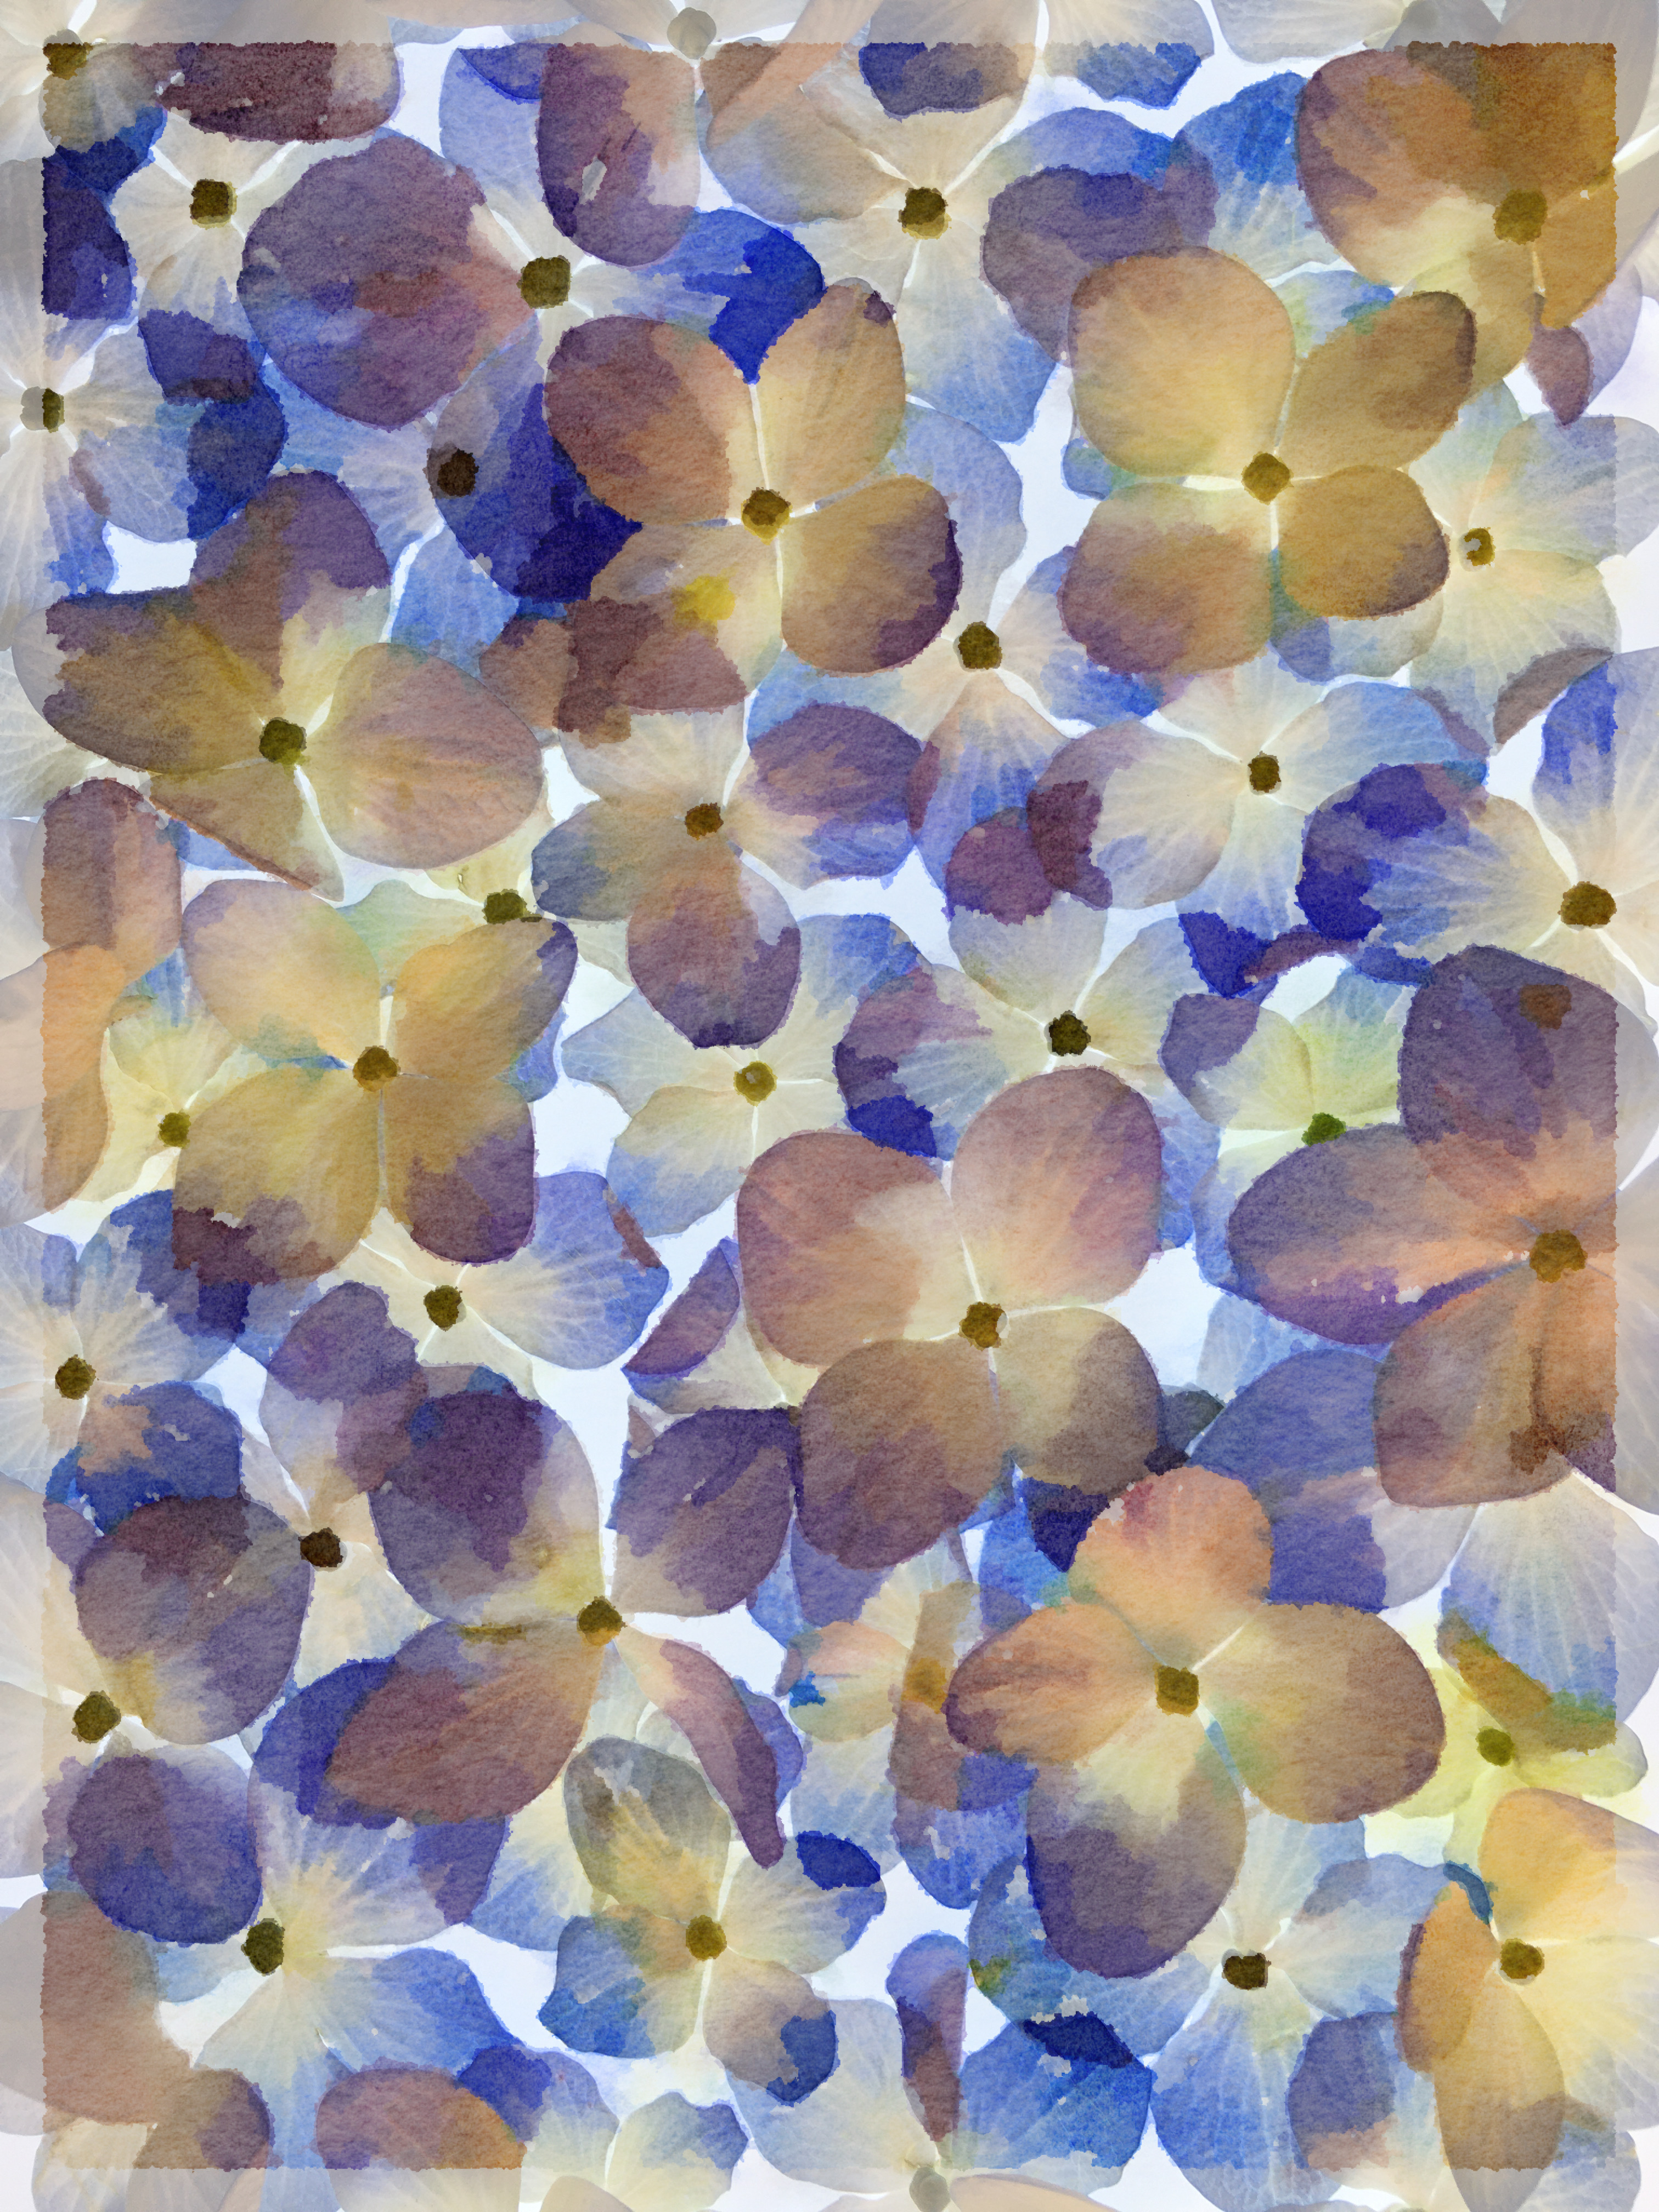 Hydrangea Petals (via iPhone) © Harold Davis